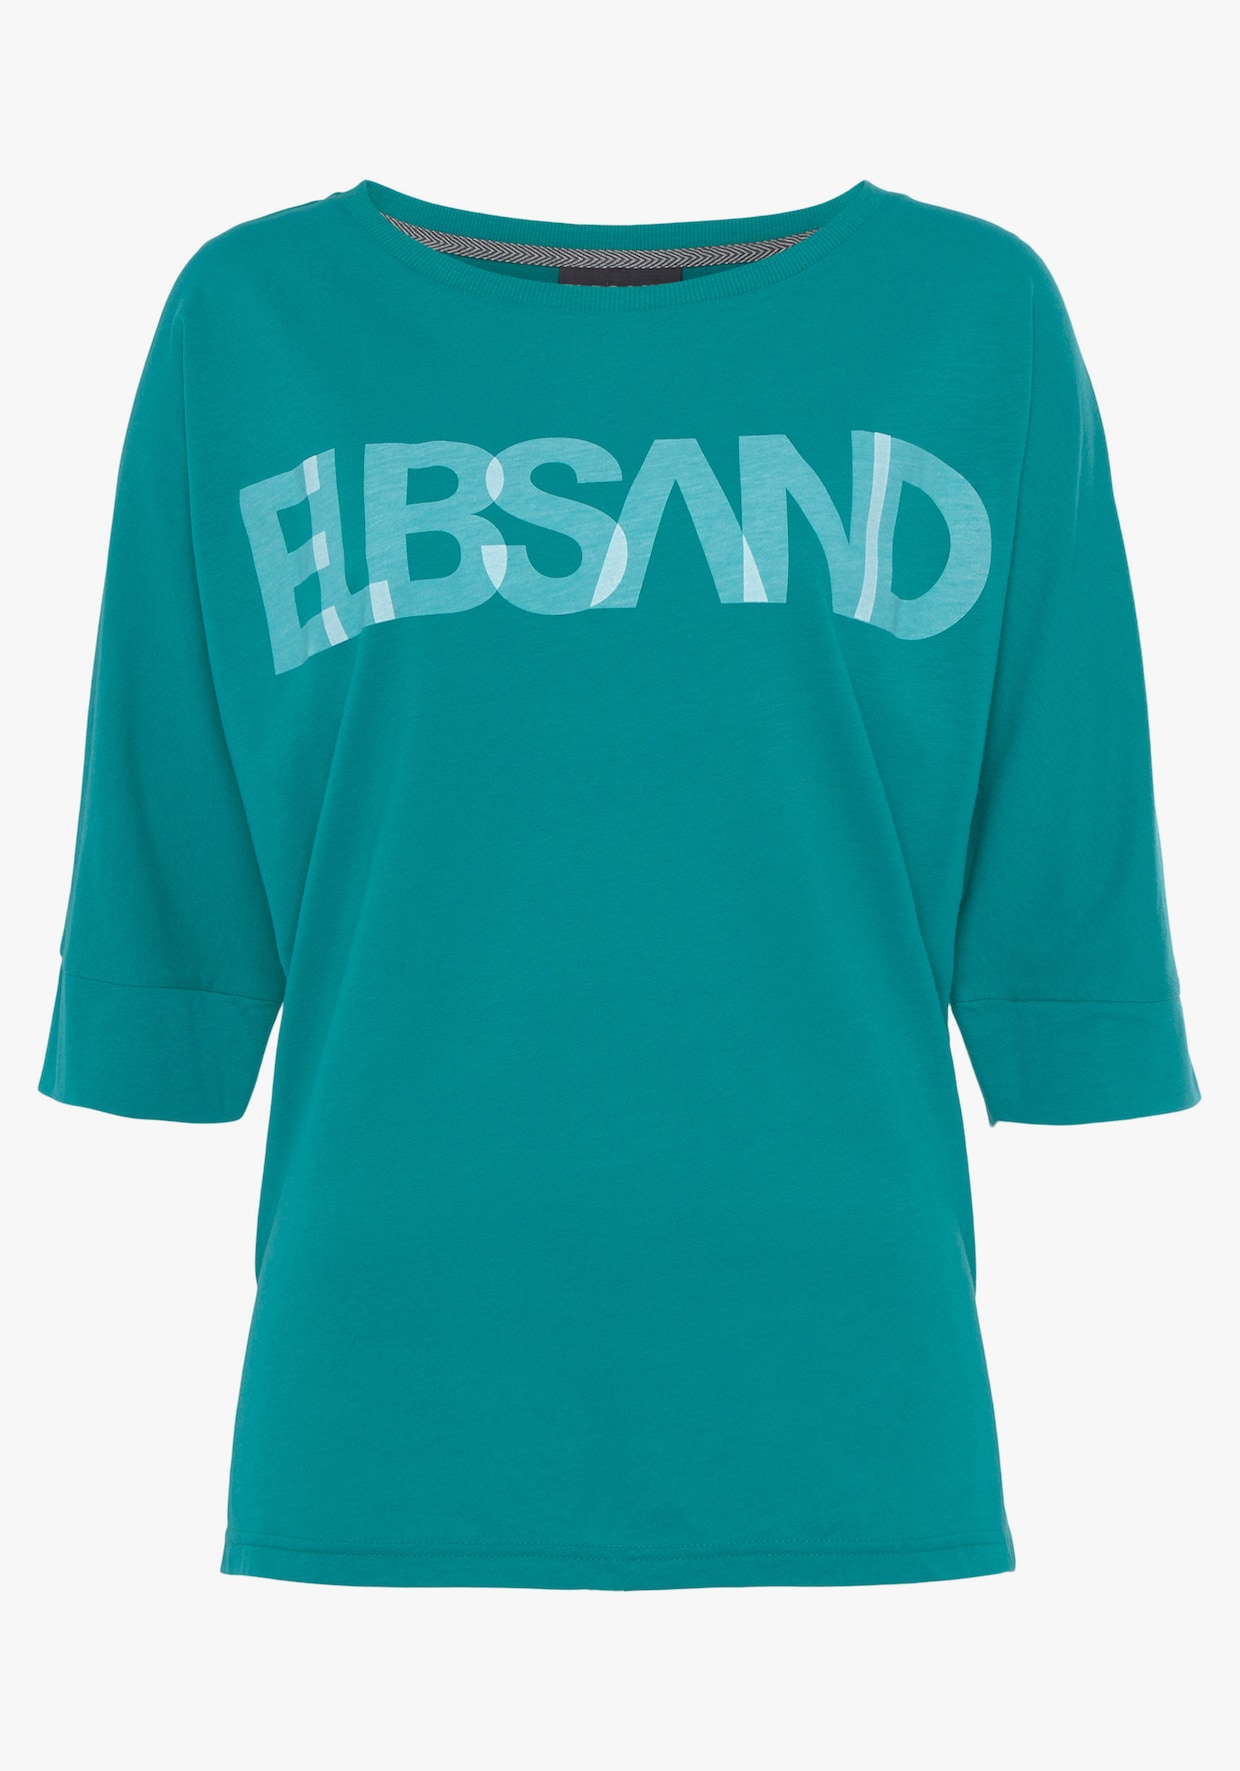 Elbsand 3/4-Arm-Shirt - seaweed teal